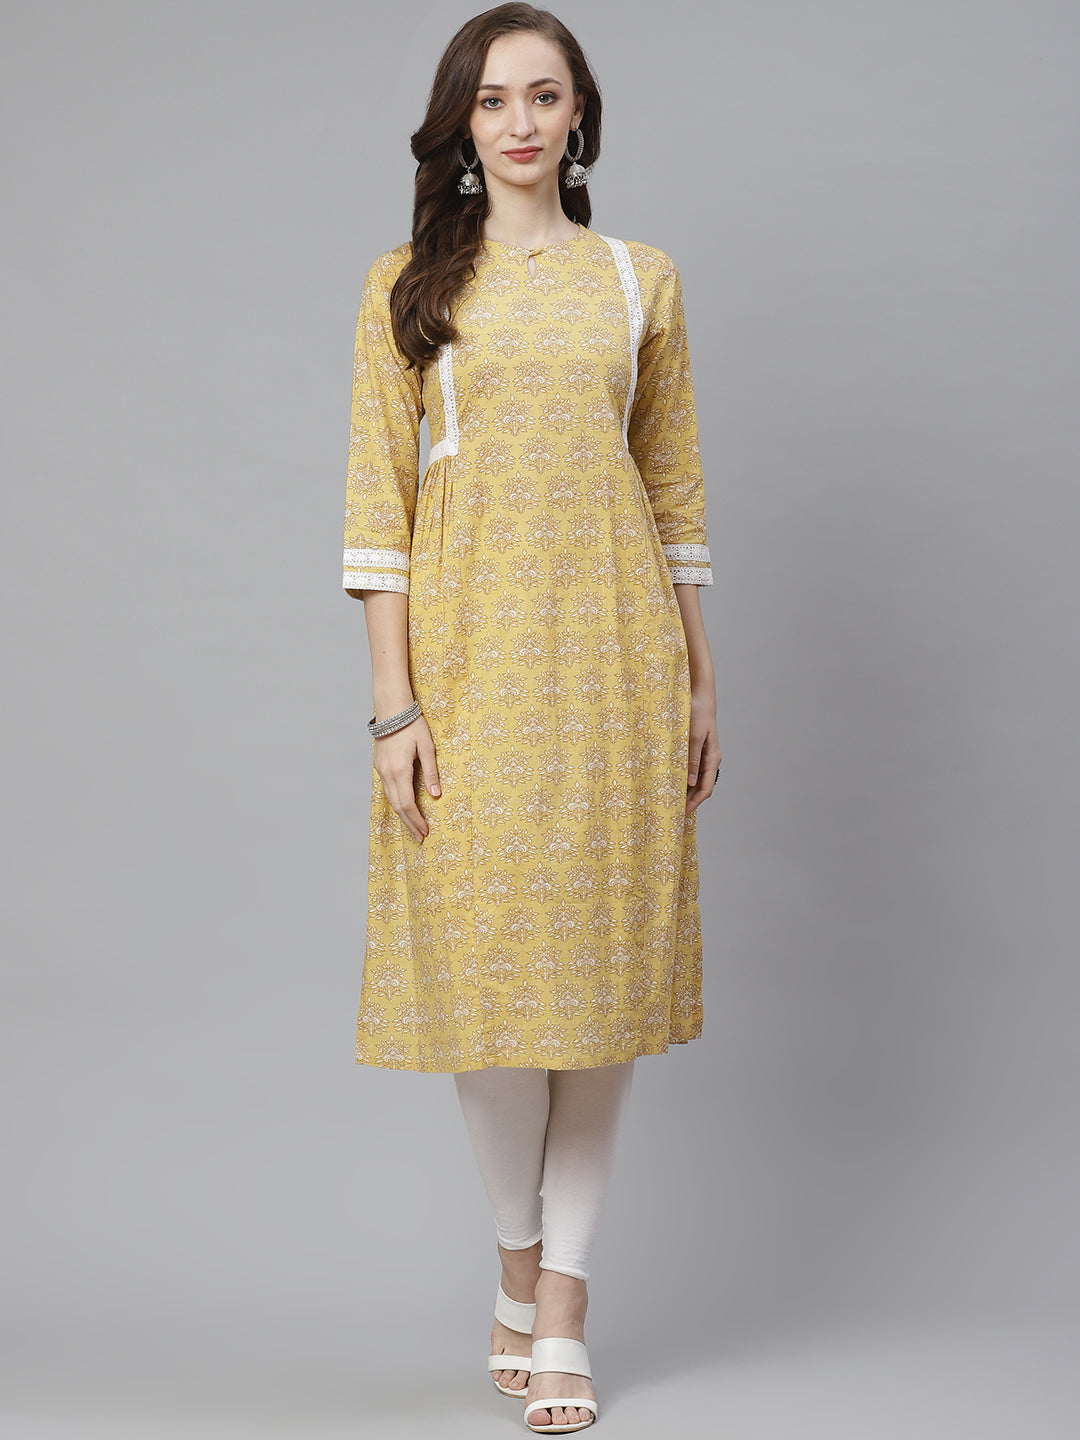 Bhama Couture Yellow & Beige Ethnic Print A-Line Kurta